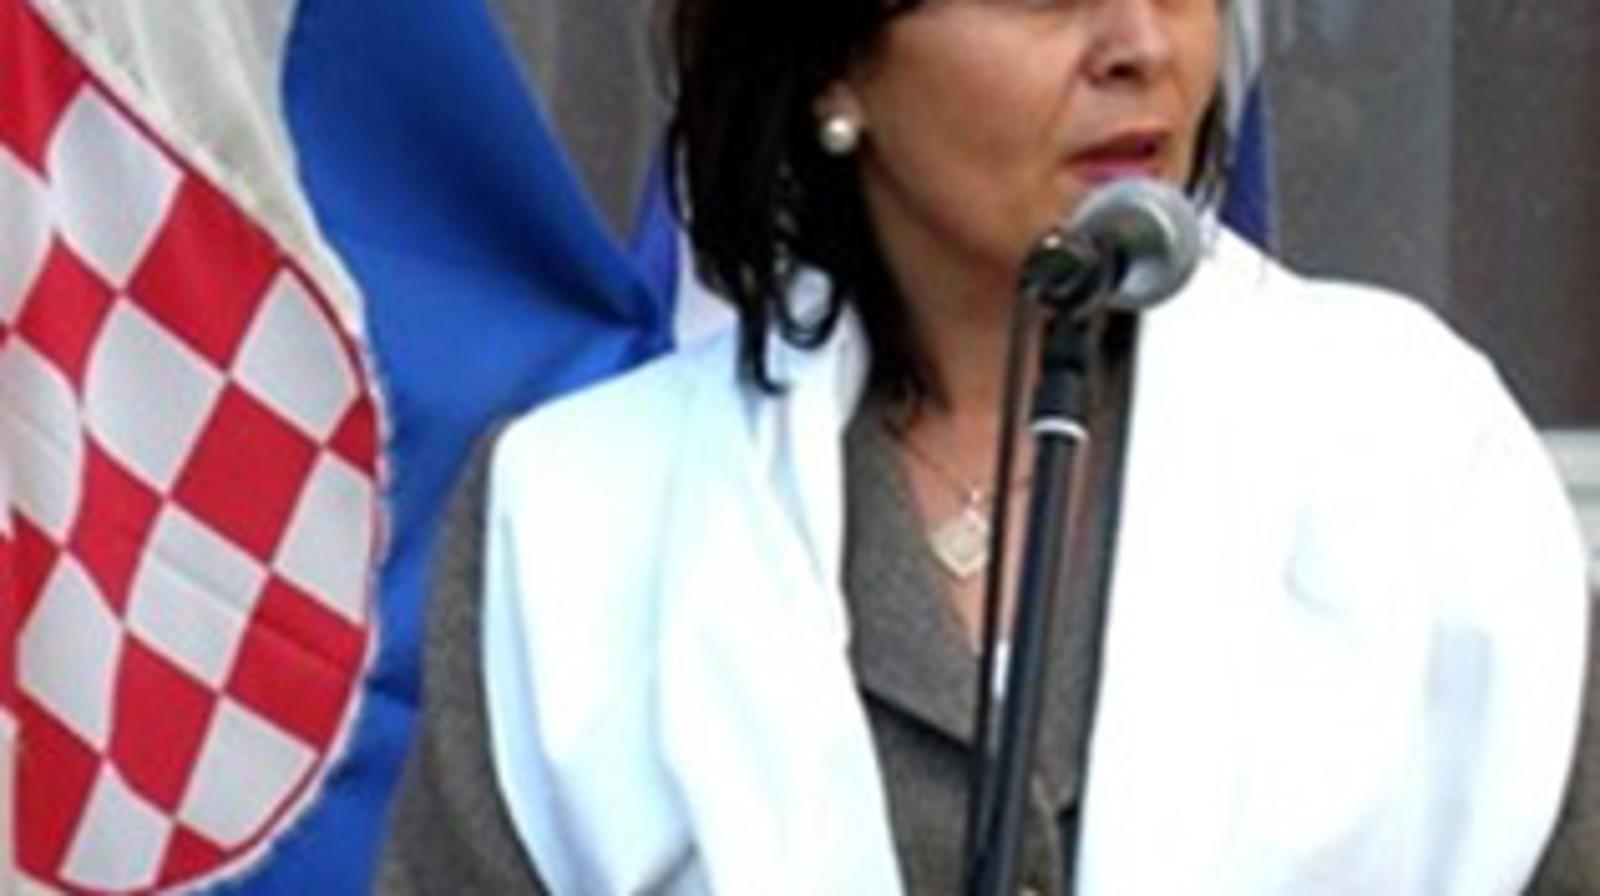 Zastupnica Suzana Bilić-Vardić